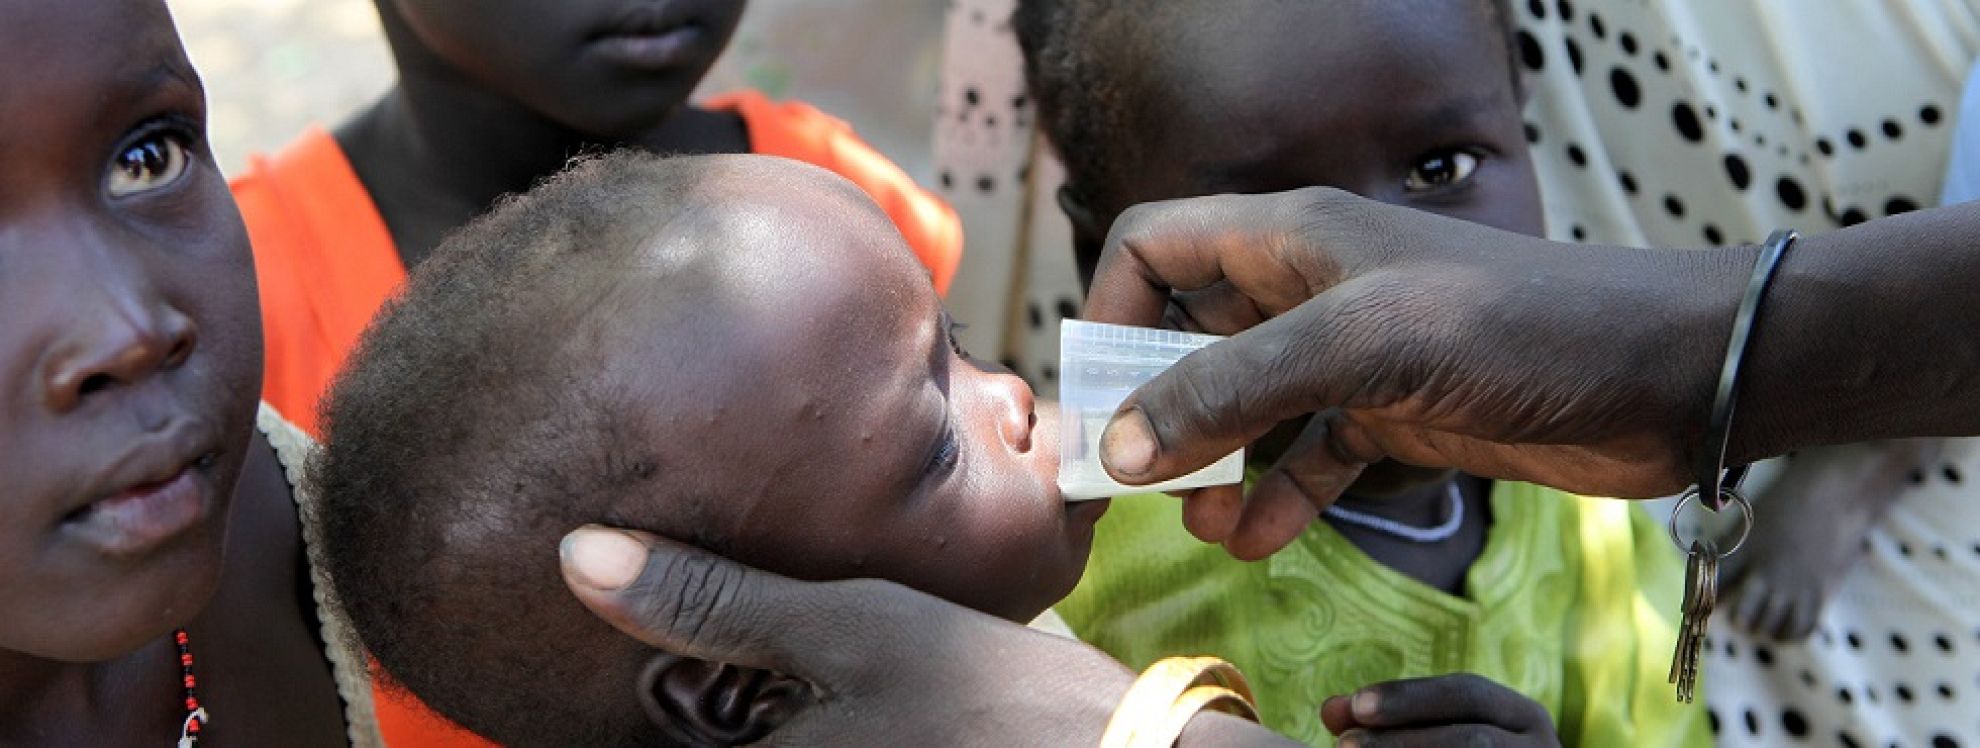 Latest News South sudan faces growing public health crisis